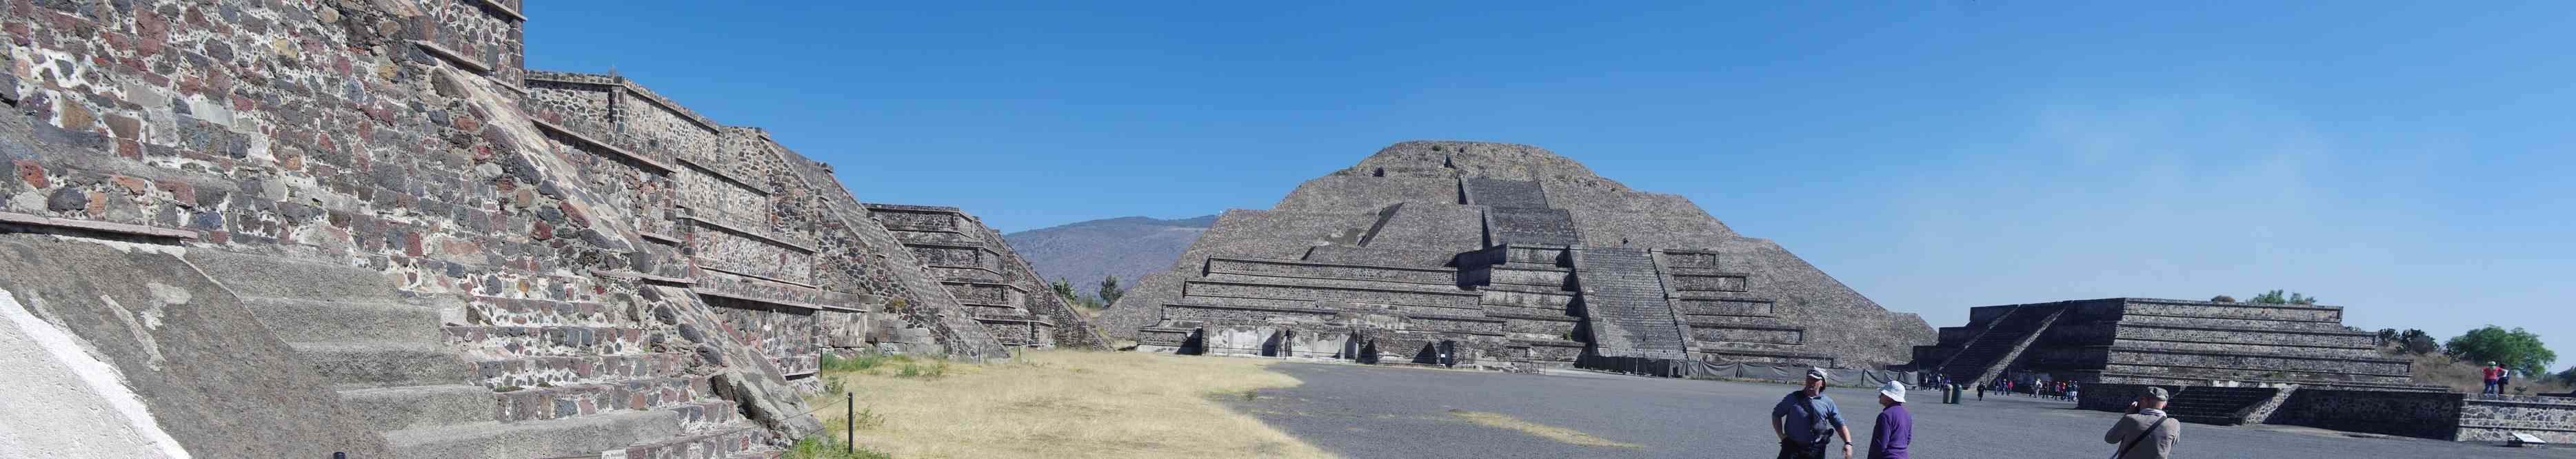 Teotihuacán (panoramique de la pyramide de la lune), le 21 janvier 2016